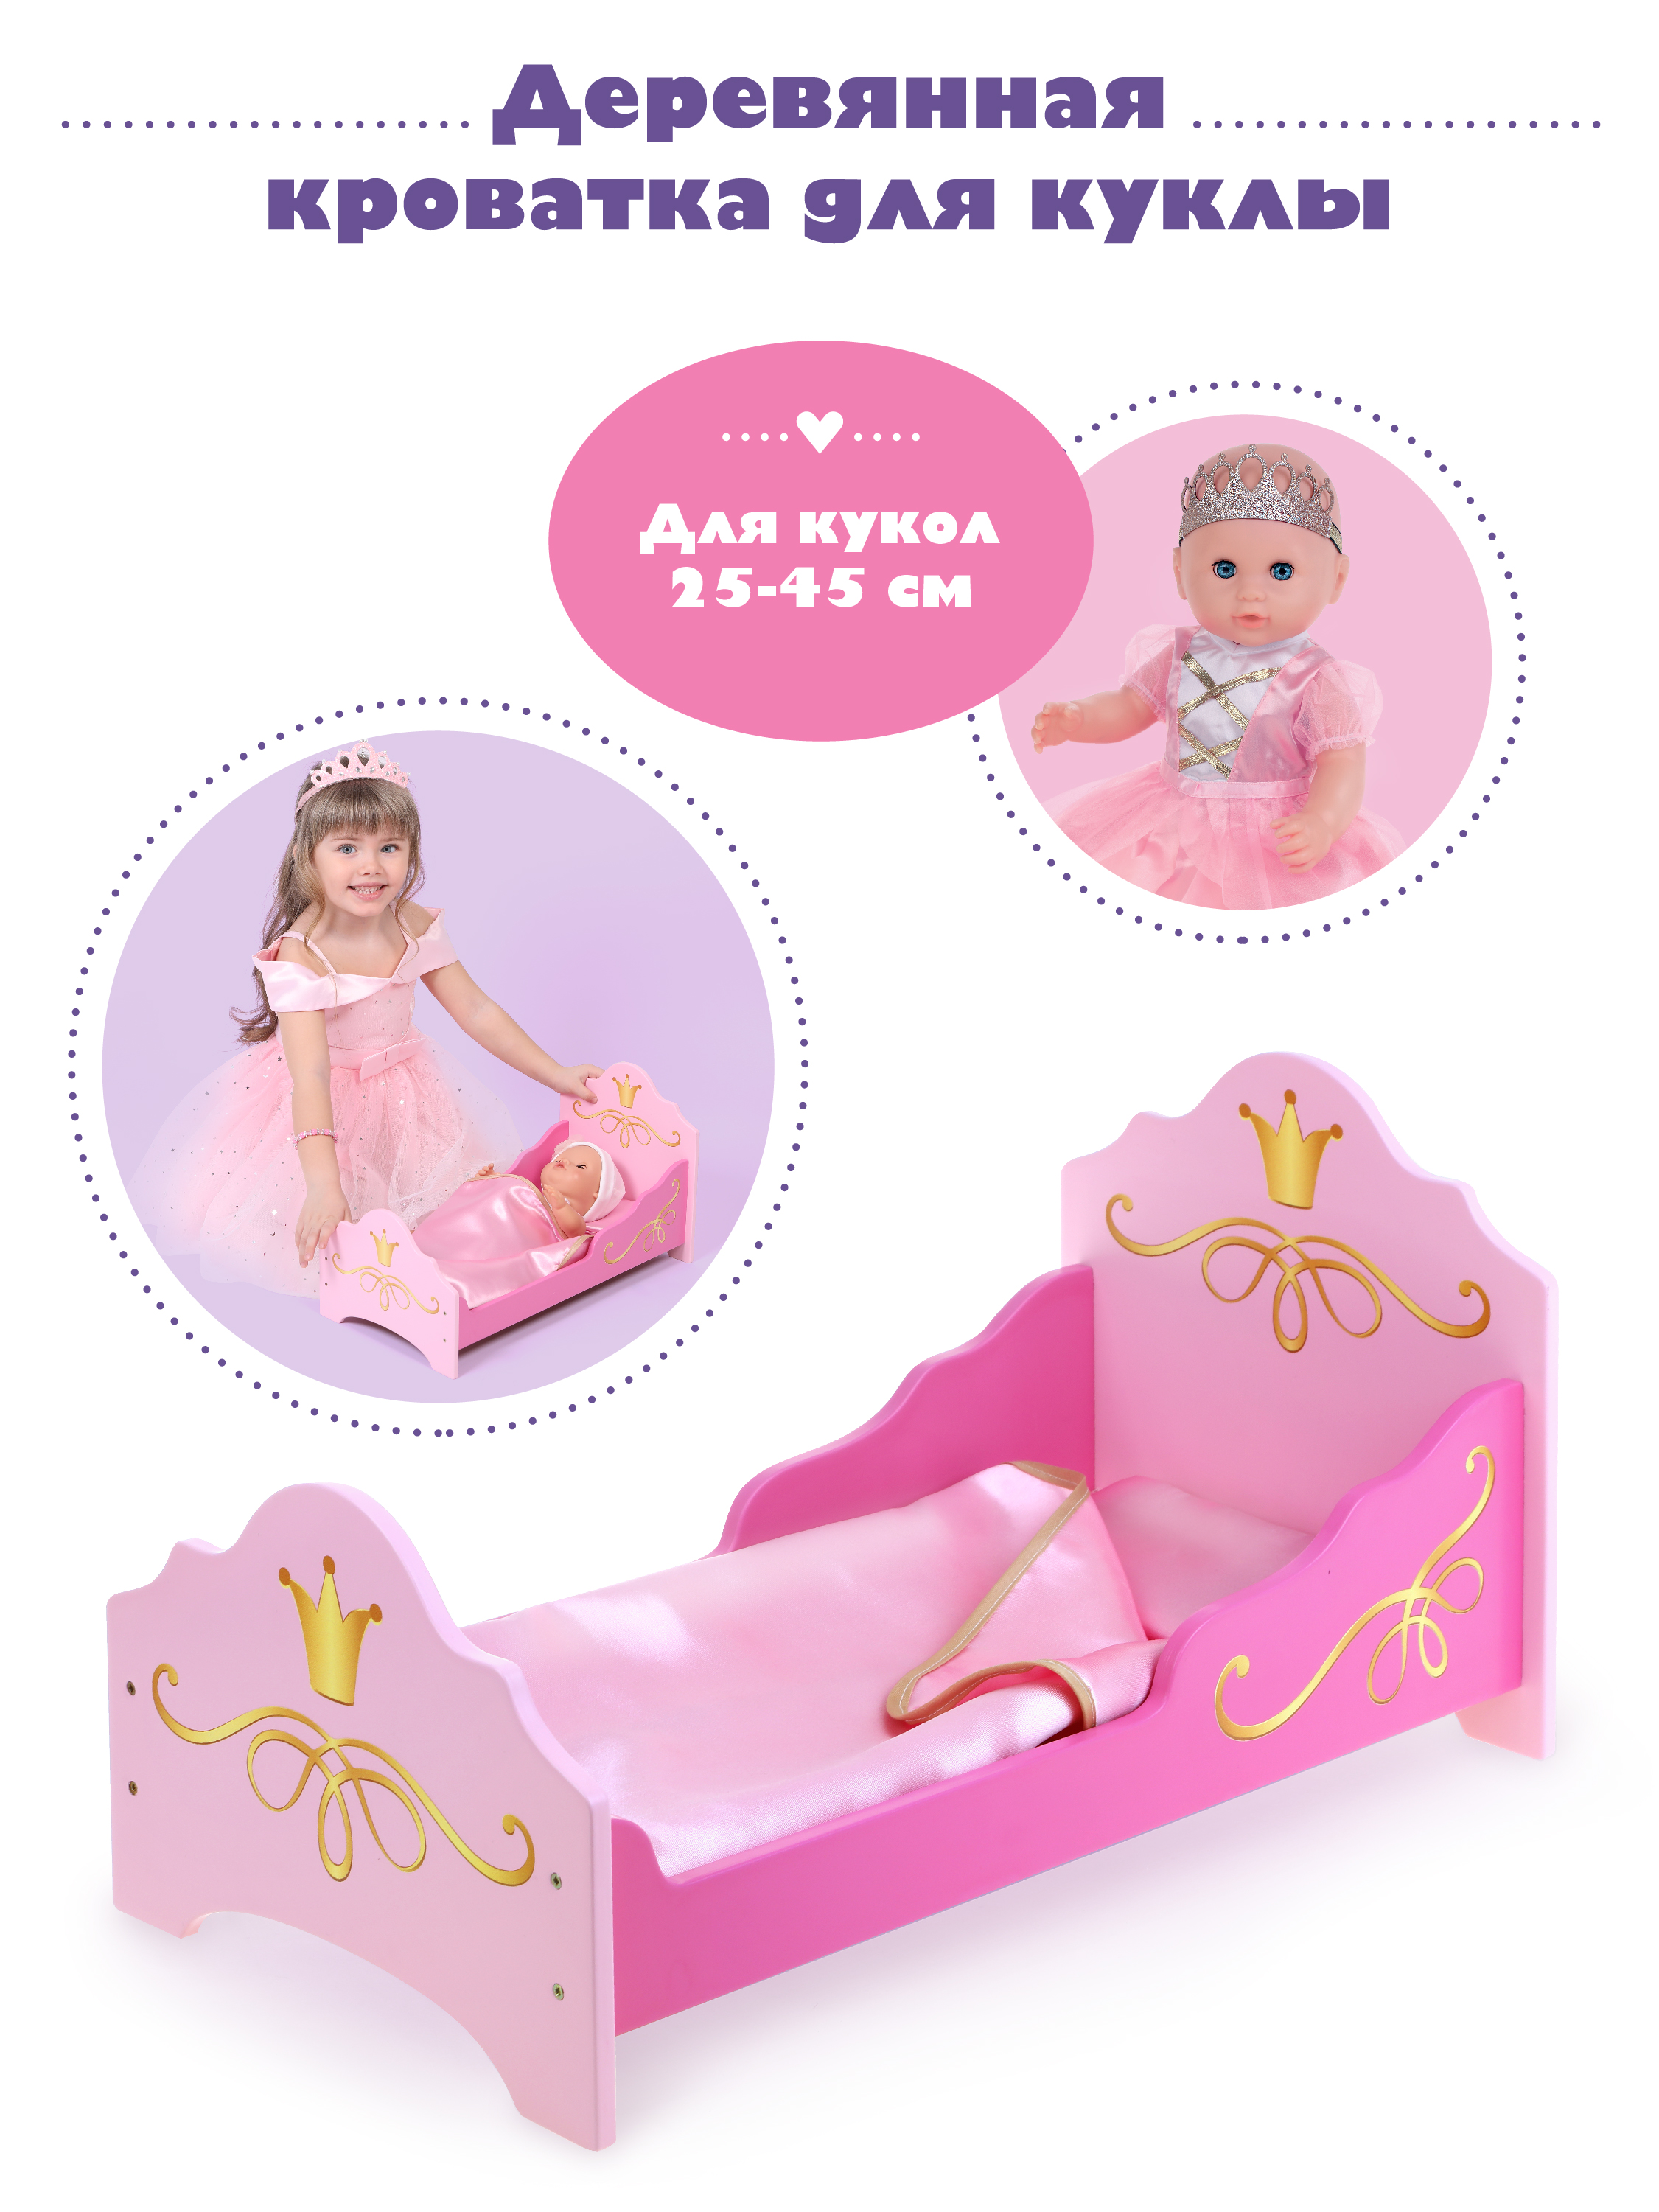 Кроватка для куклы Mary Poppins Принцесса 67398 кроватка для куклы toy mix рр 2015 059